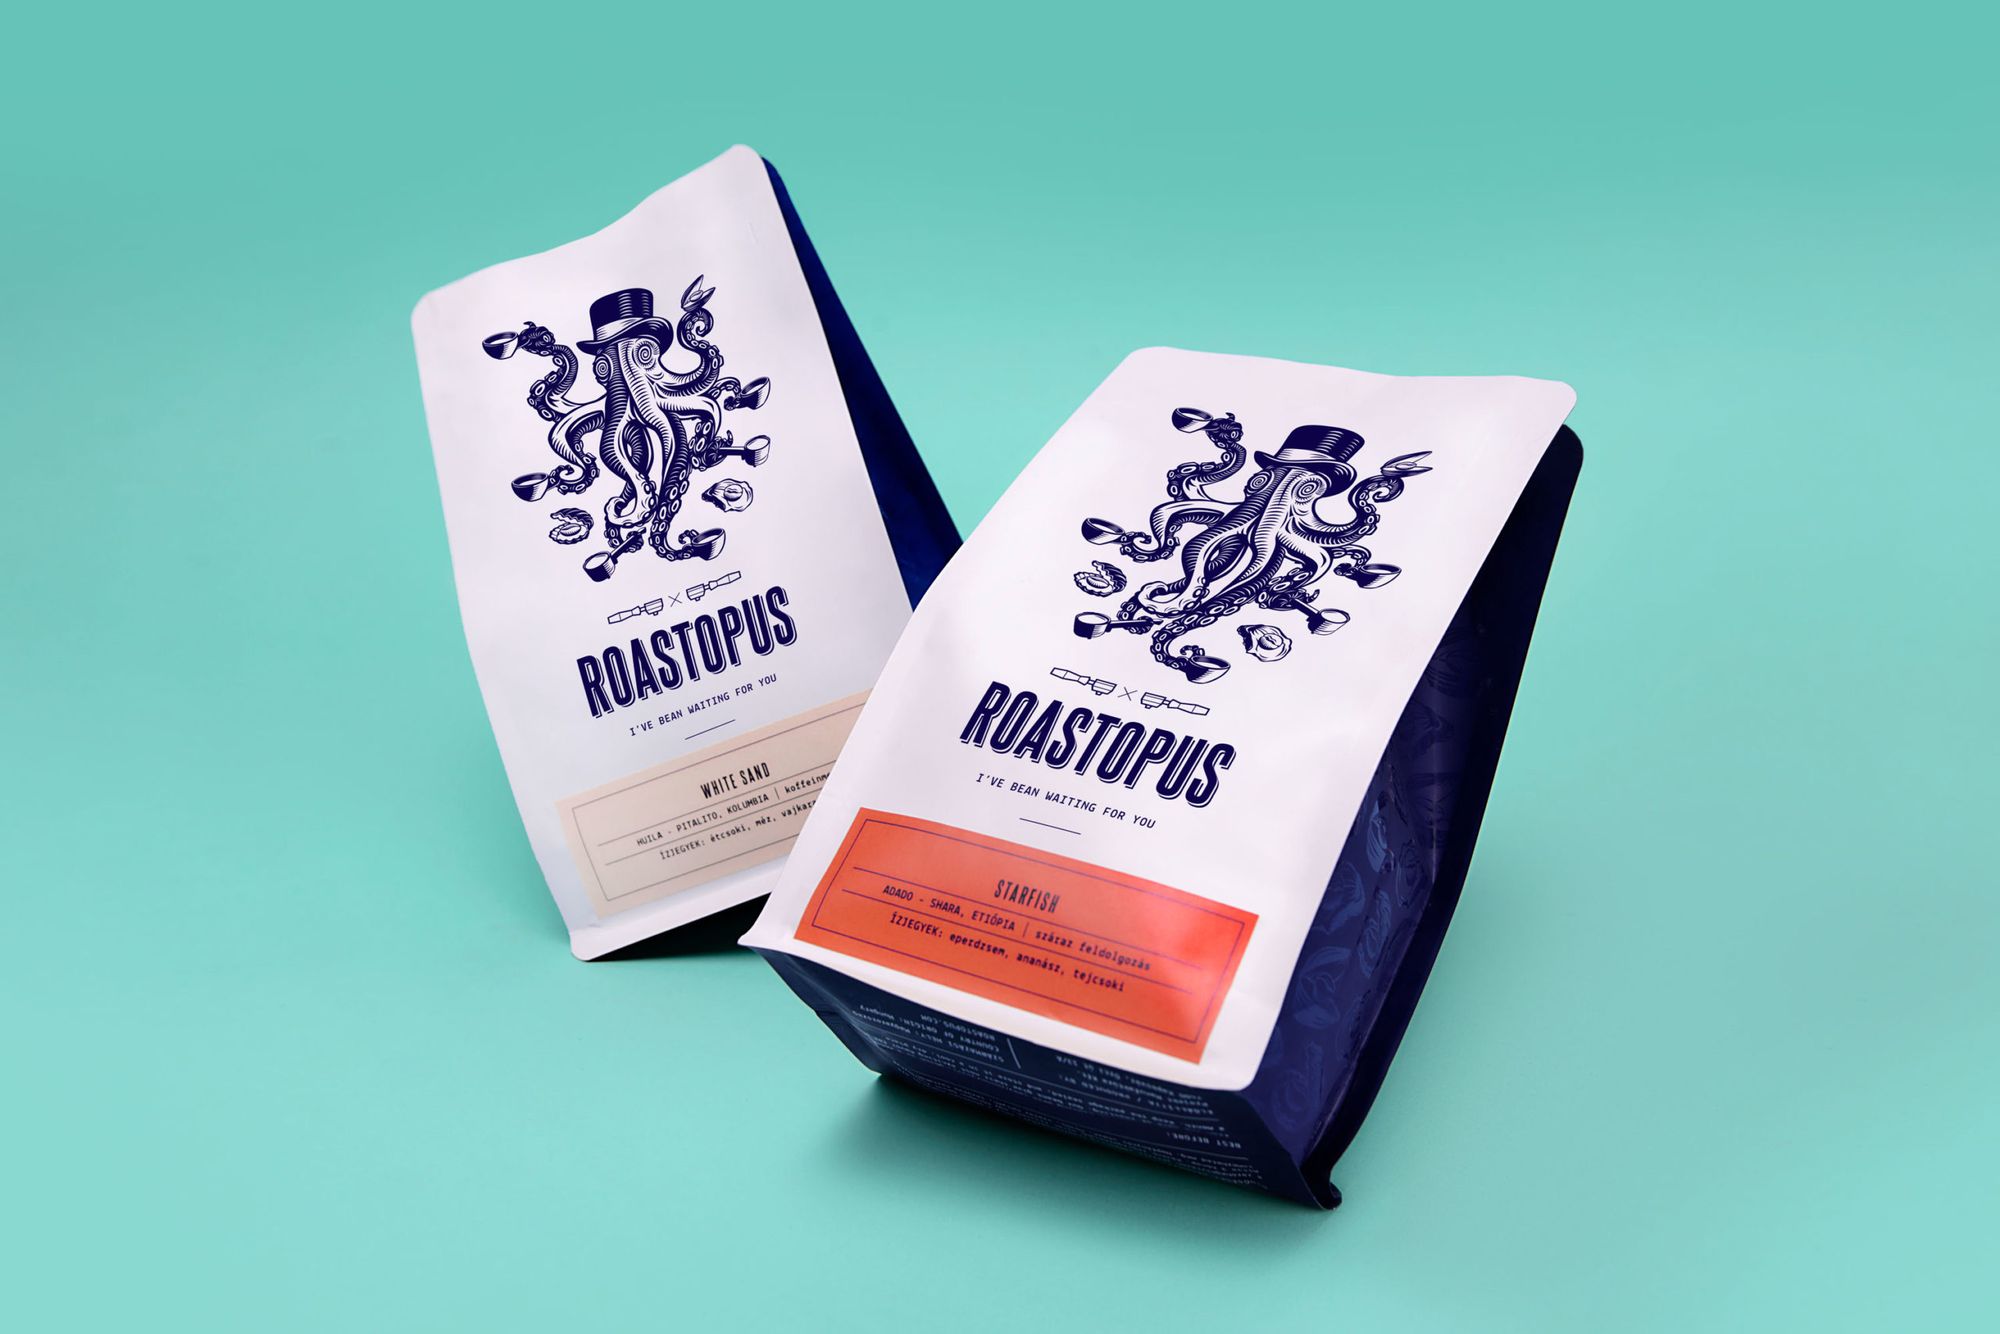 “We’ve set the bar quite high” | Roastopus: coffee & design